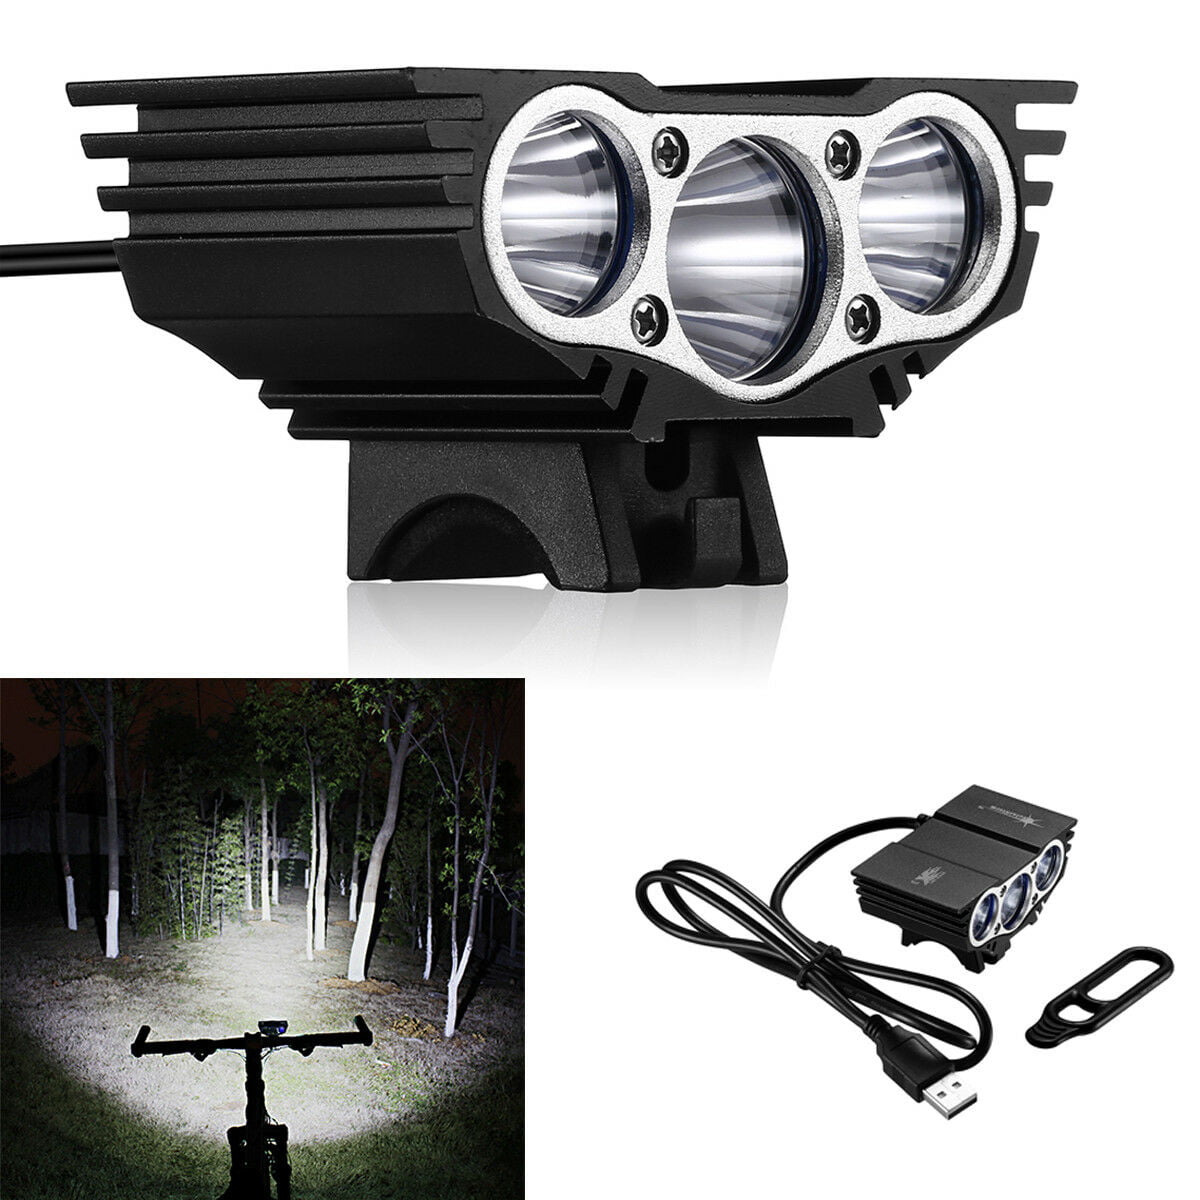 3 x CREE XM-L T6 LED Bicycle bike HeadLight Head Light Lamp Torch Flashlight USA 